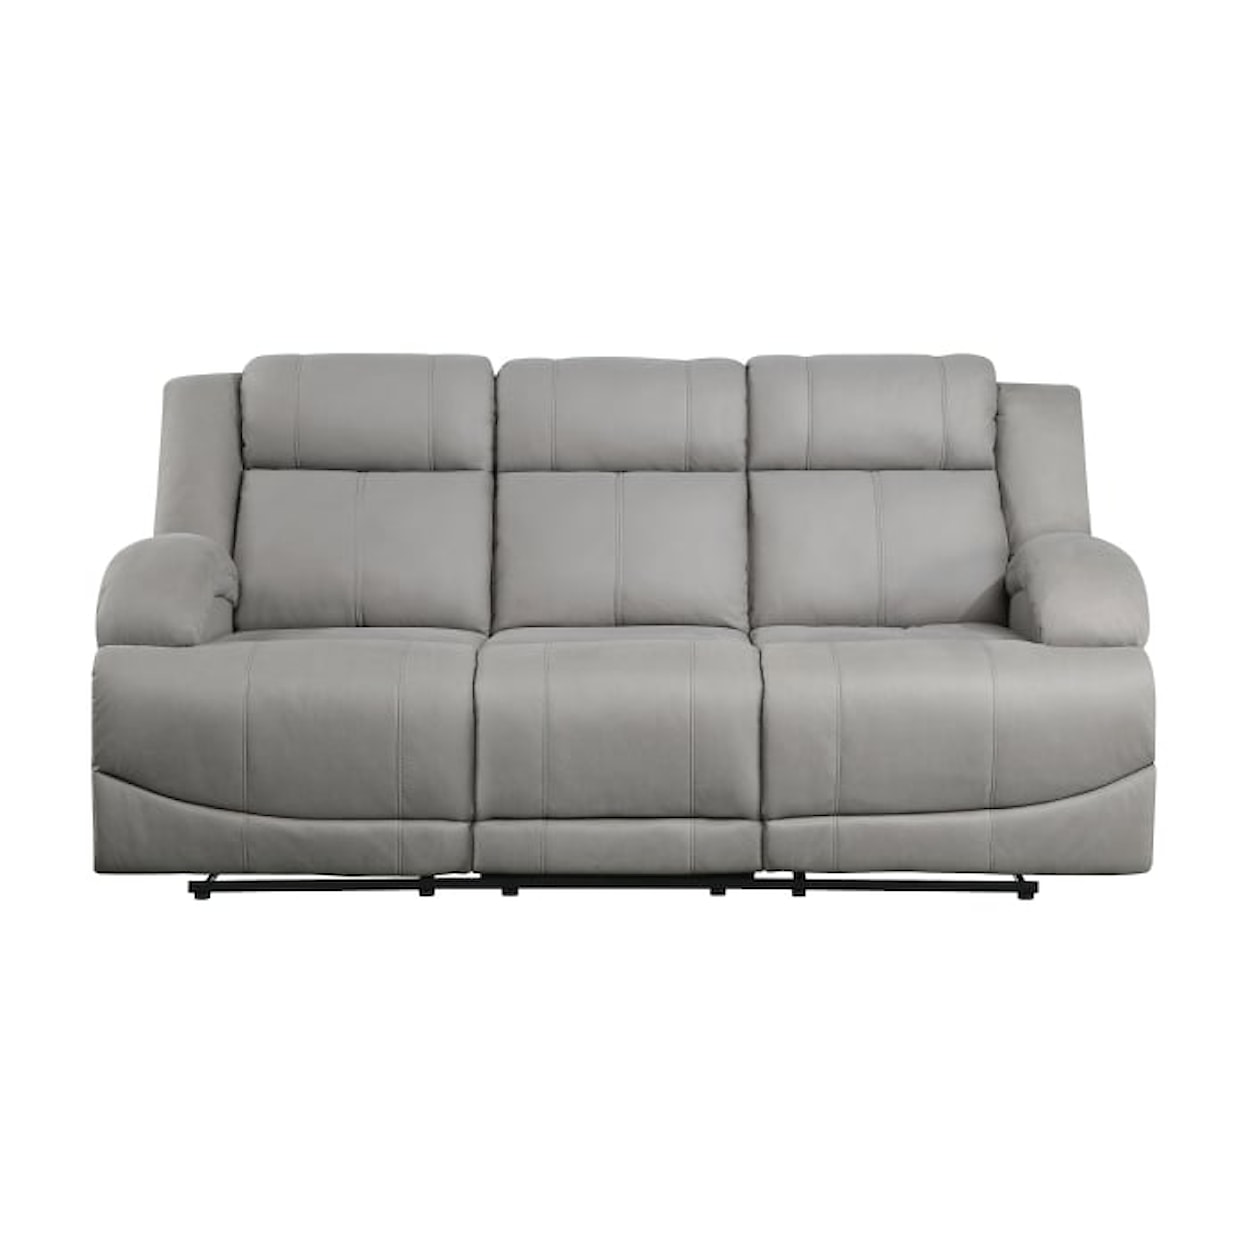 Homelegance Camryn Double Reclining Sofa